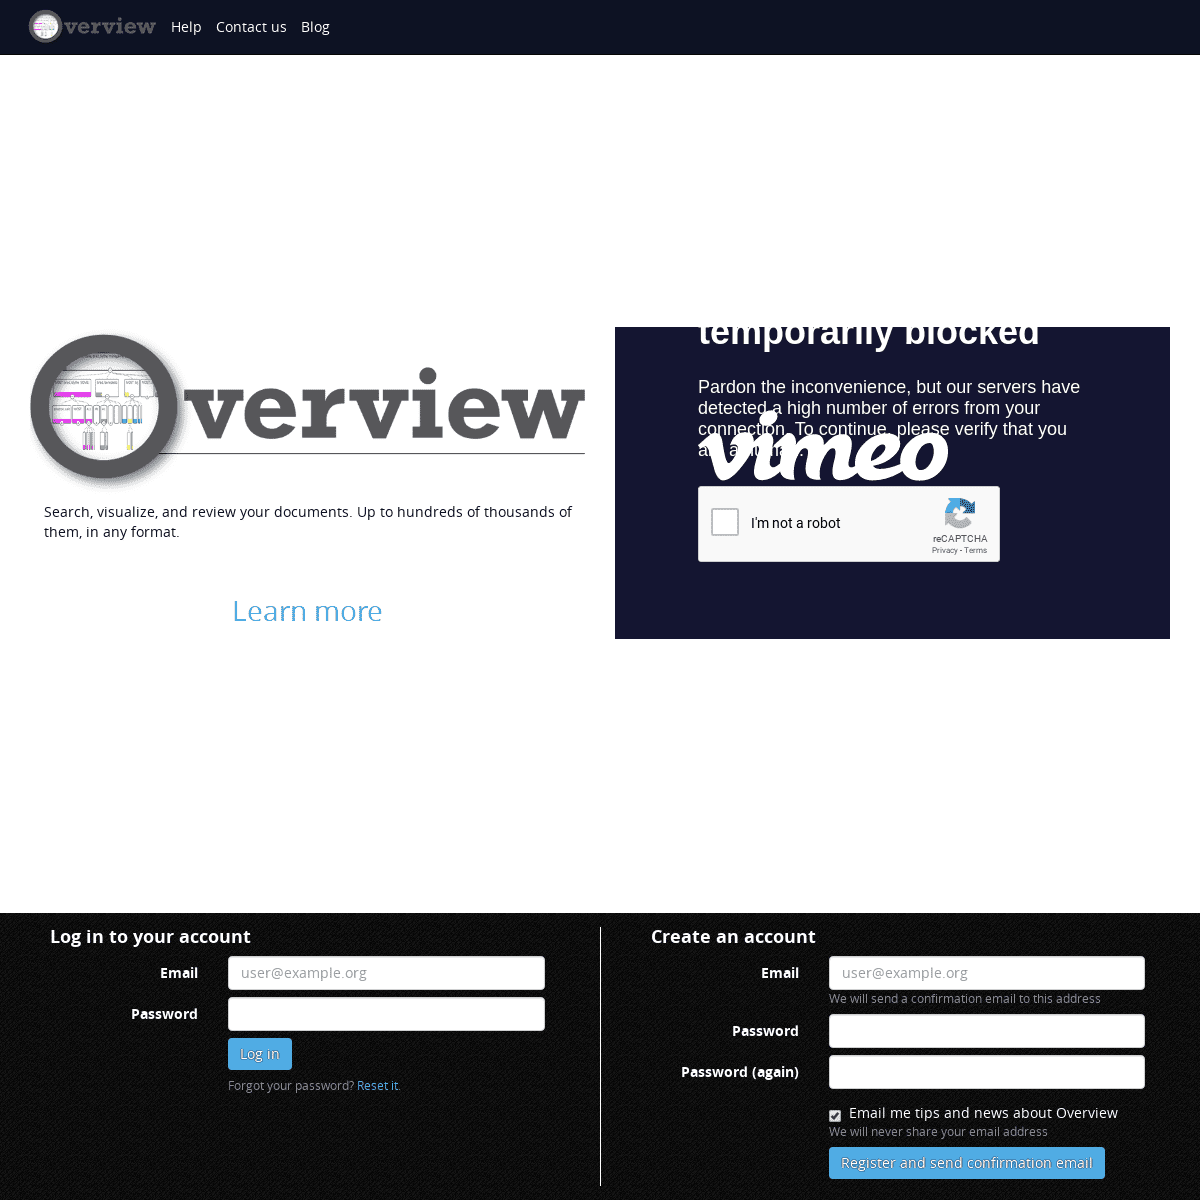 A complete backup of overviewdocs.com